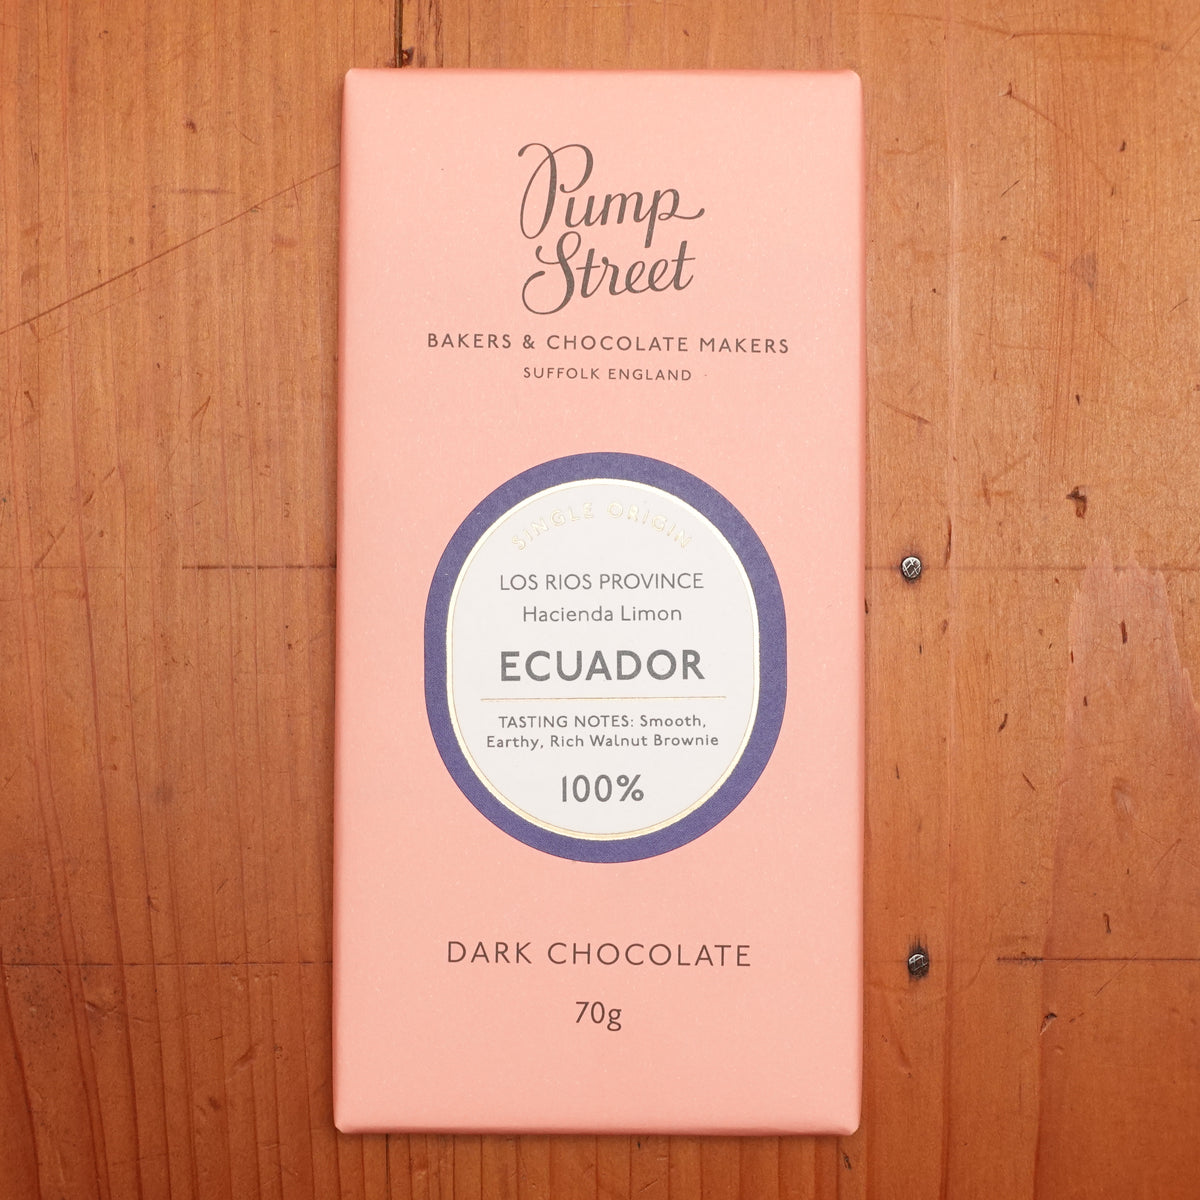 Pump Street Ecuador Hacienda Limon 100% Dark Chocolate - 70g